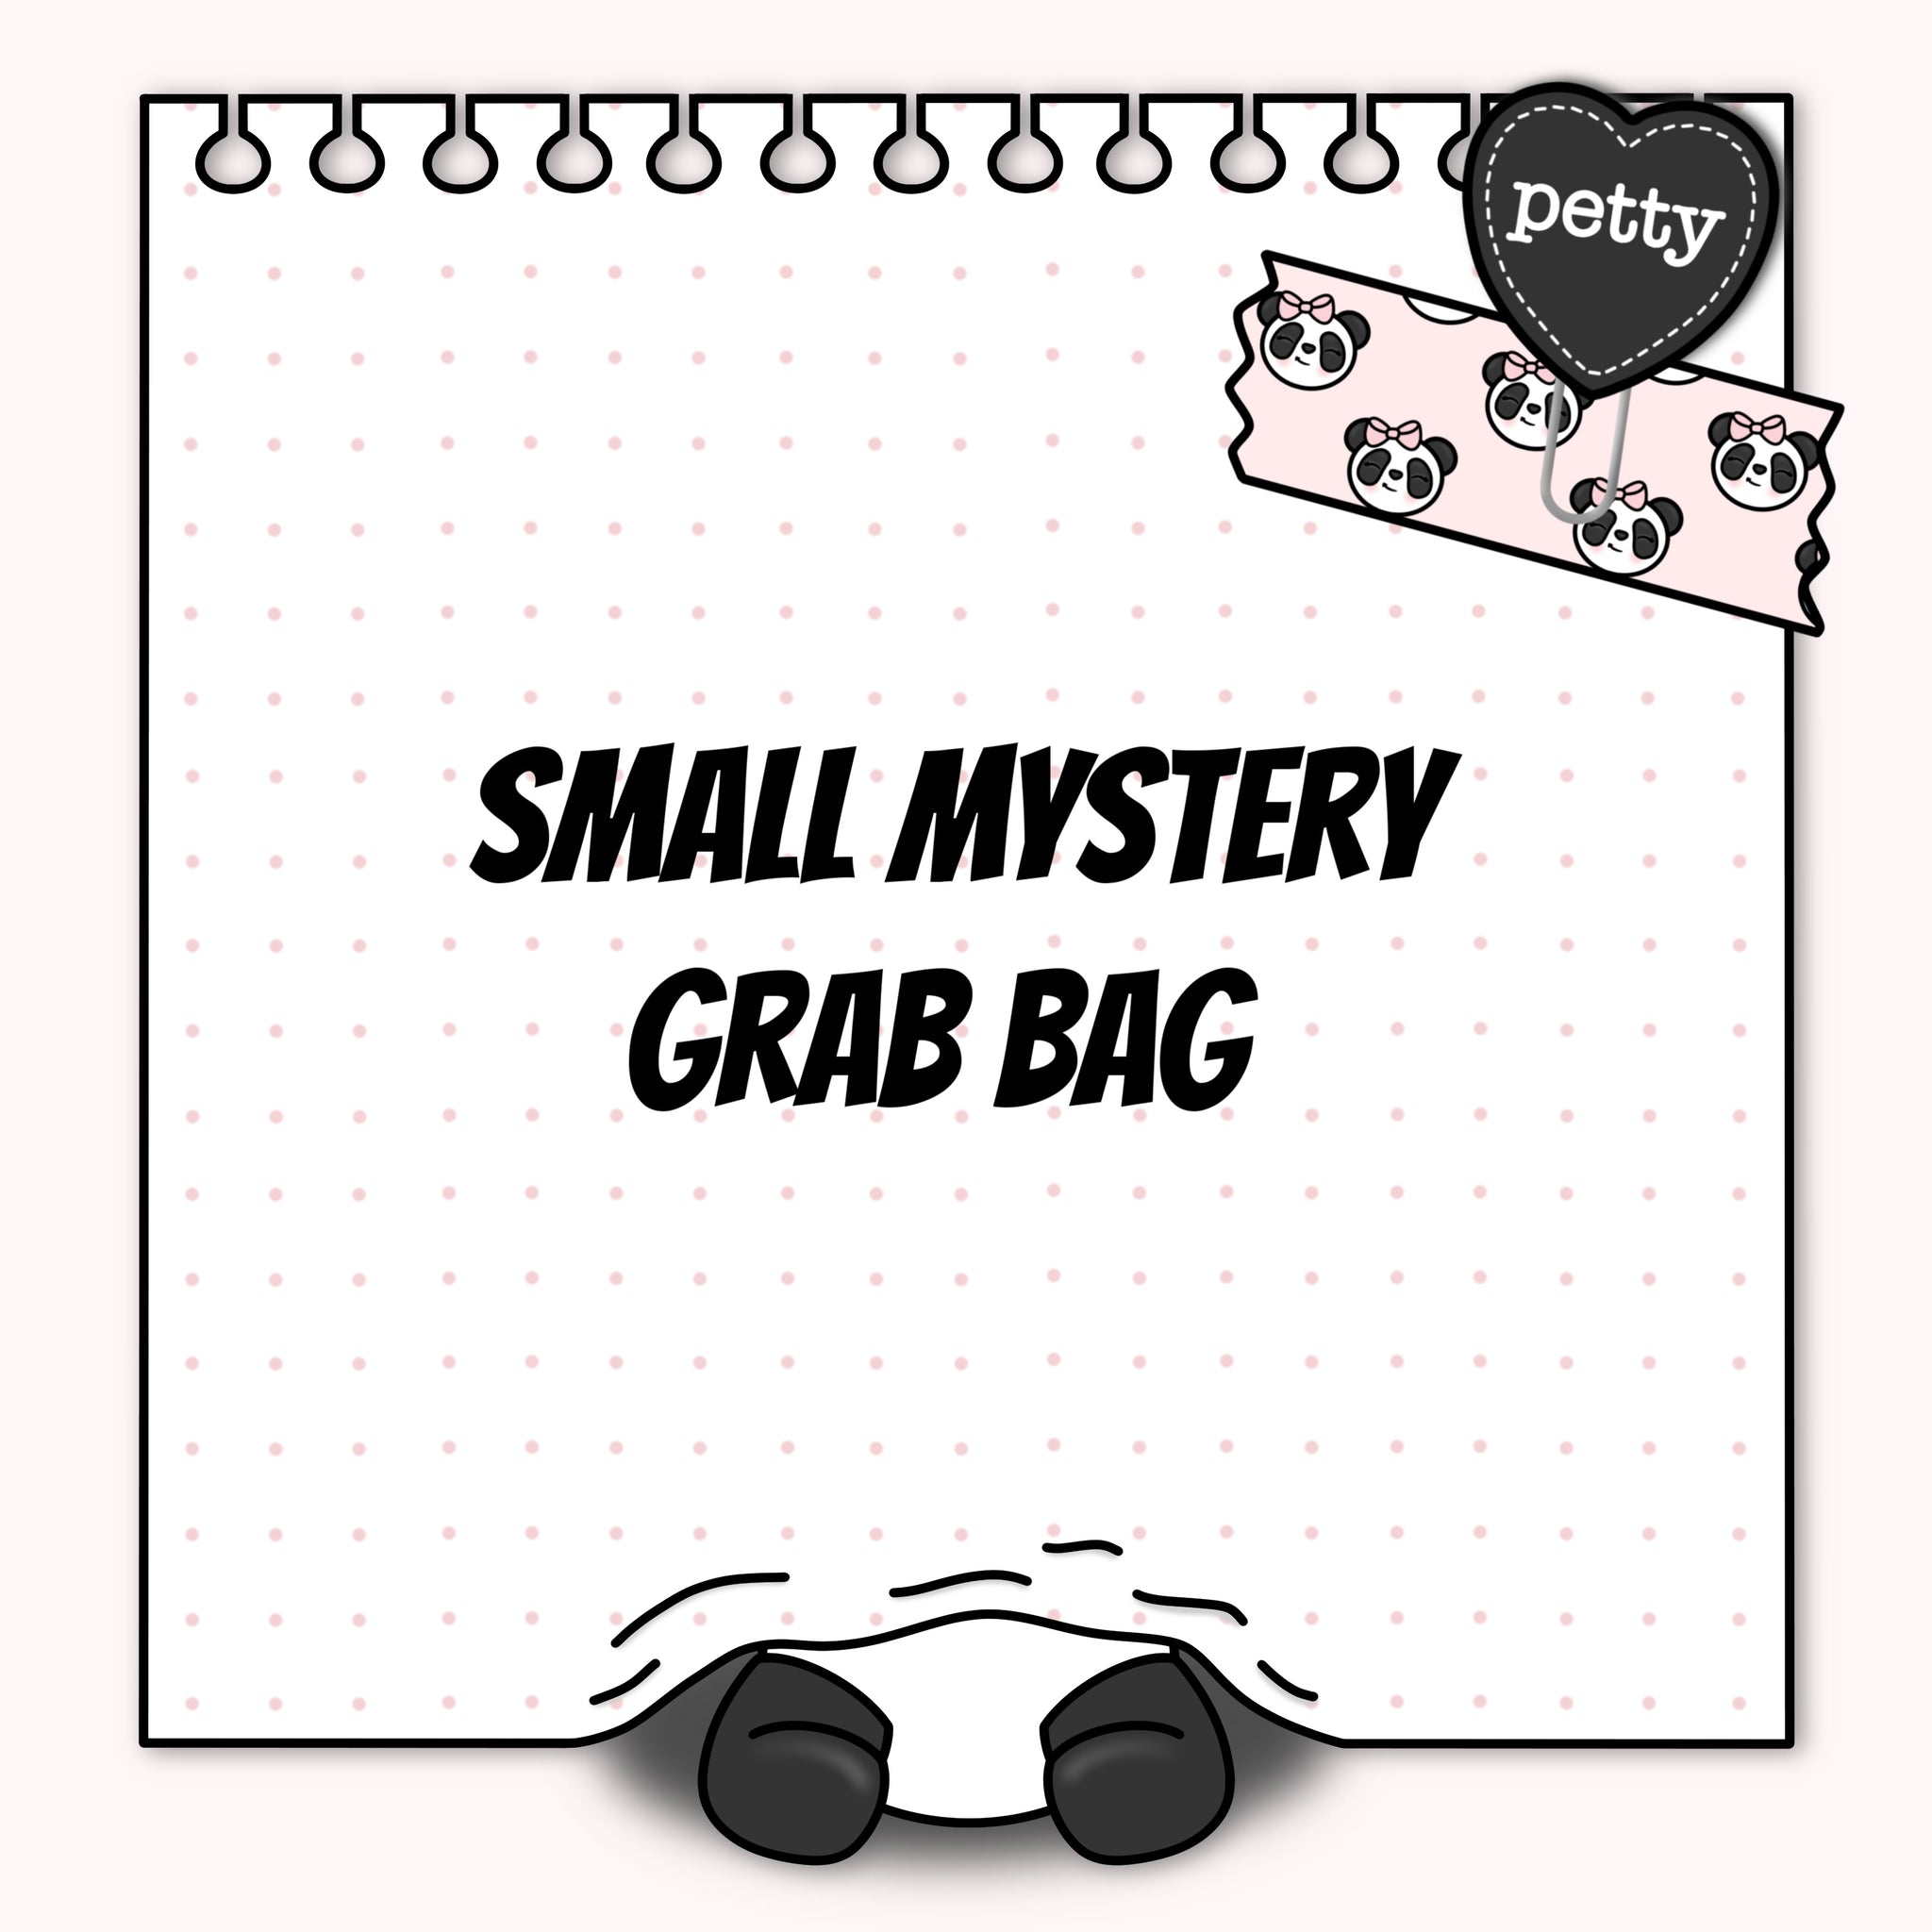 Small Mystery Grab Bag